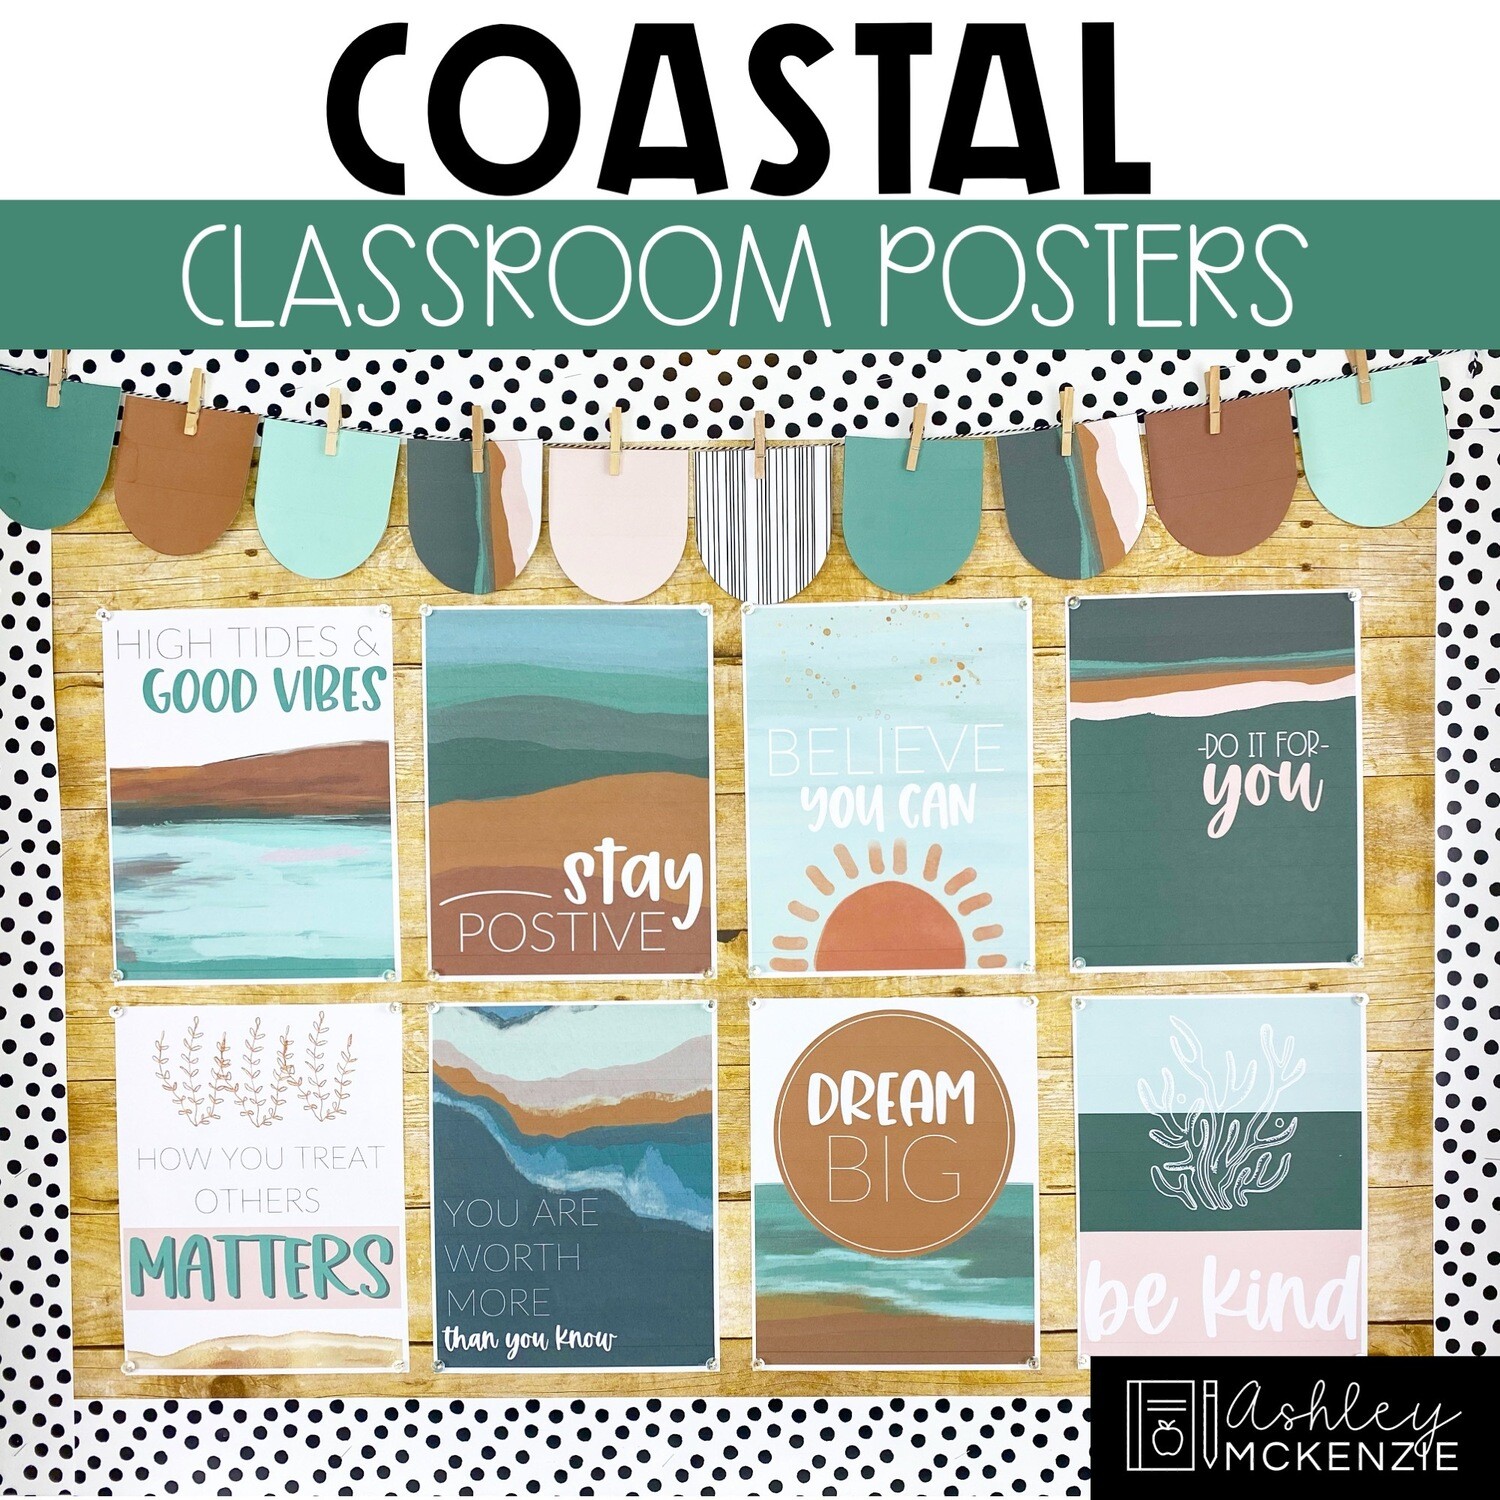 Coastal Classroom Decor | Classroom Posters - Editable!